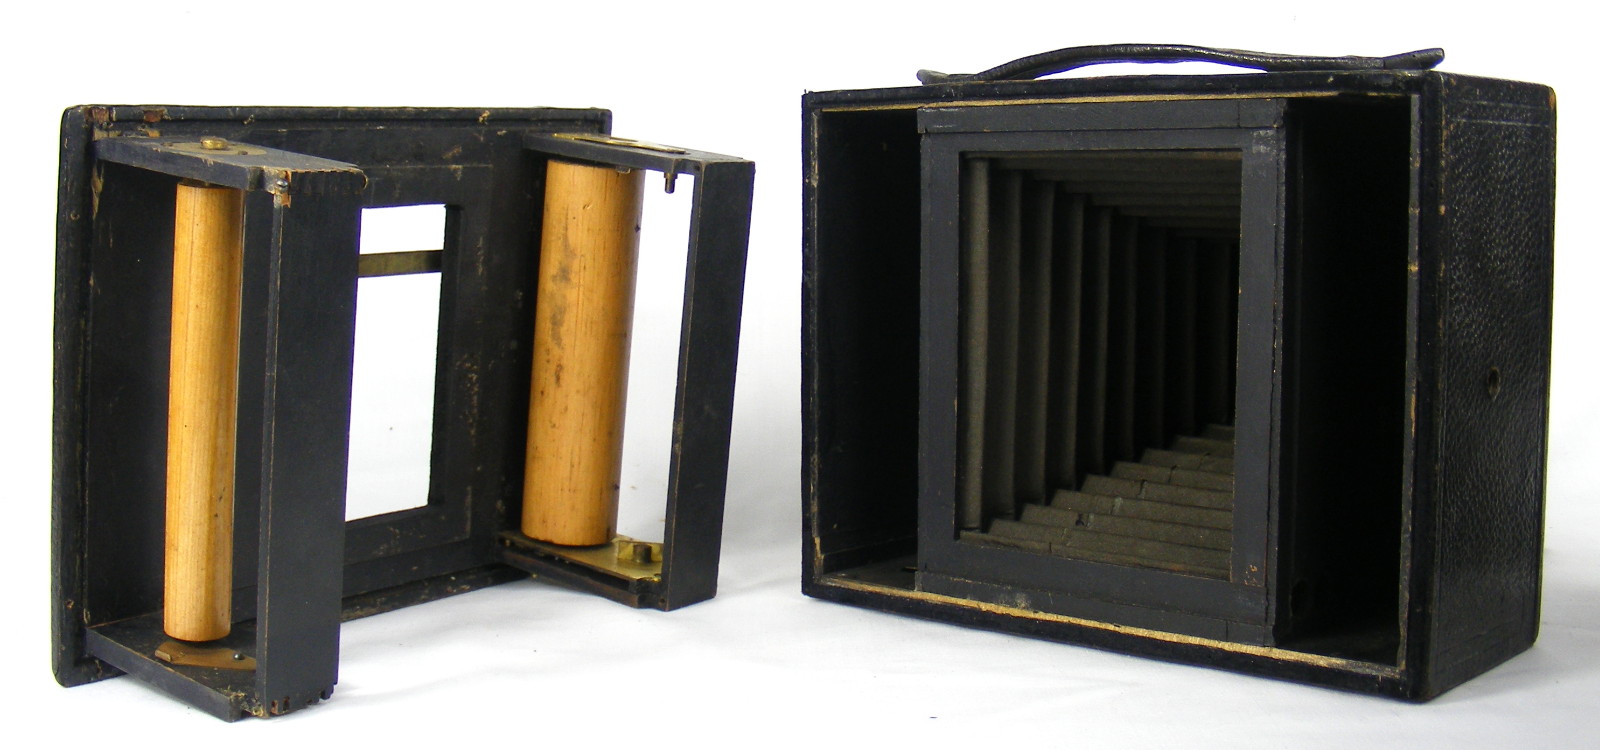 Image of Flat Folding Kodak (film holder removed)